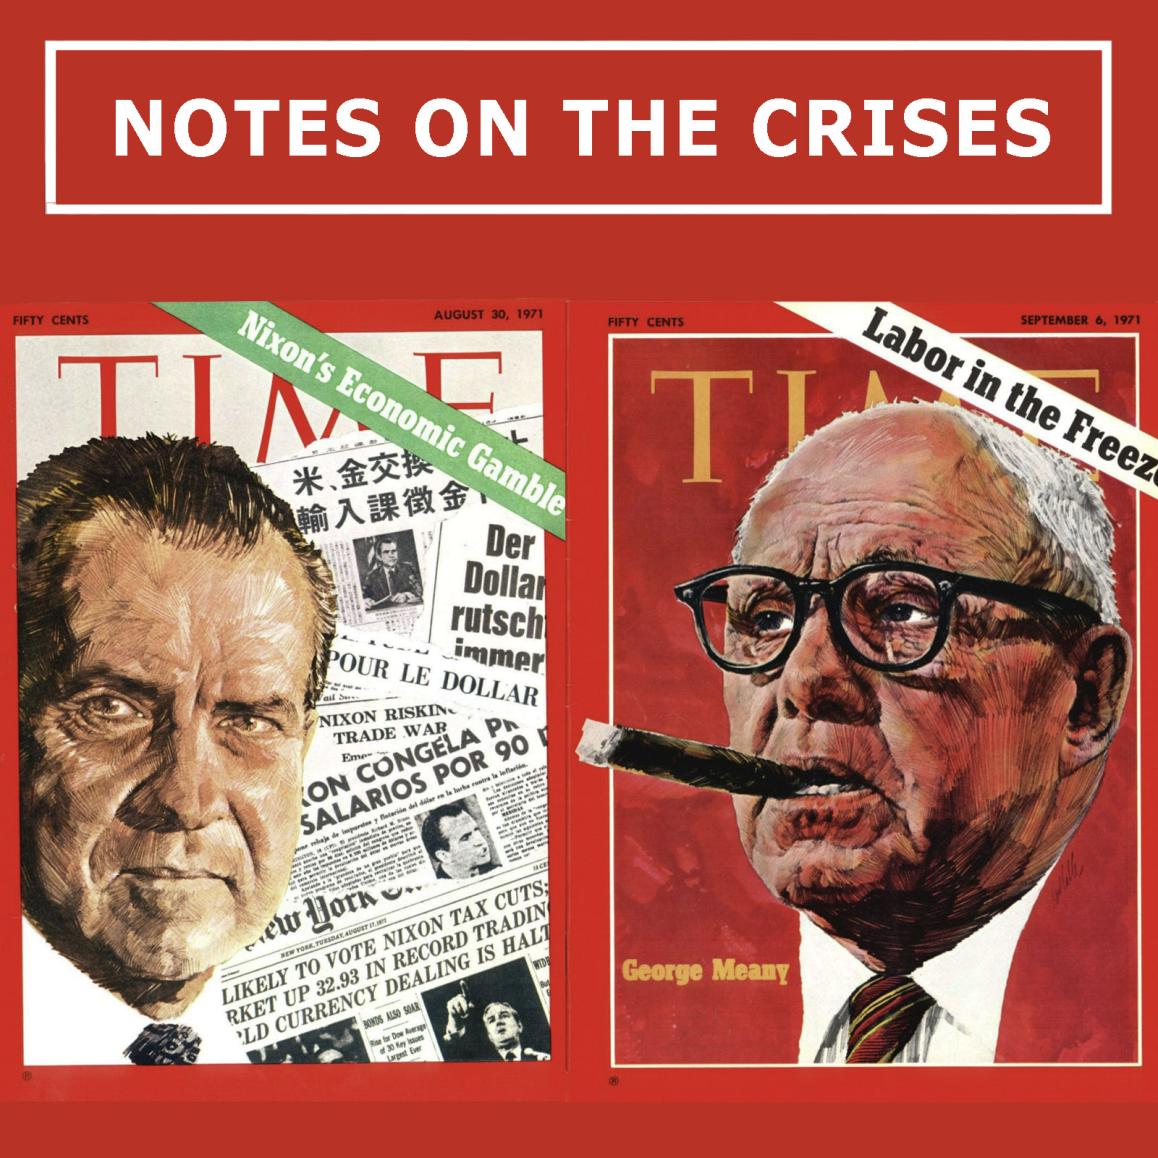 [PREMIUM TRANSCRIPT] Notes On The Crises Podcast #4: Daniel Mitchell, Chief Economist of Nixon’s Pay Board